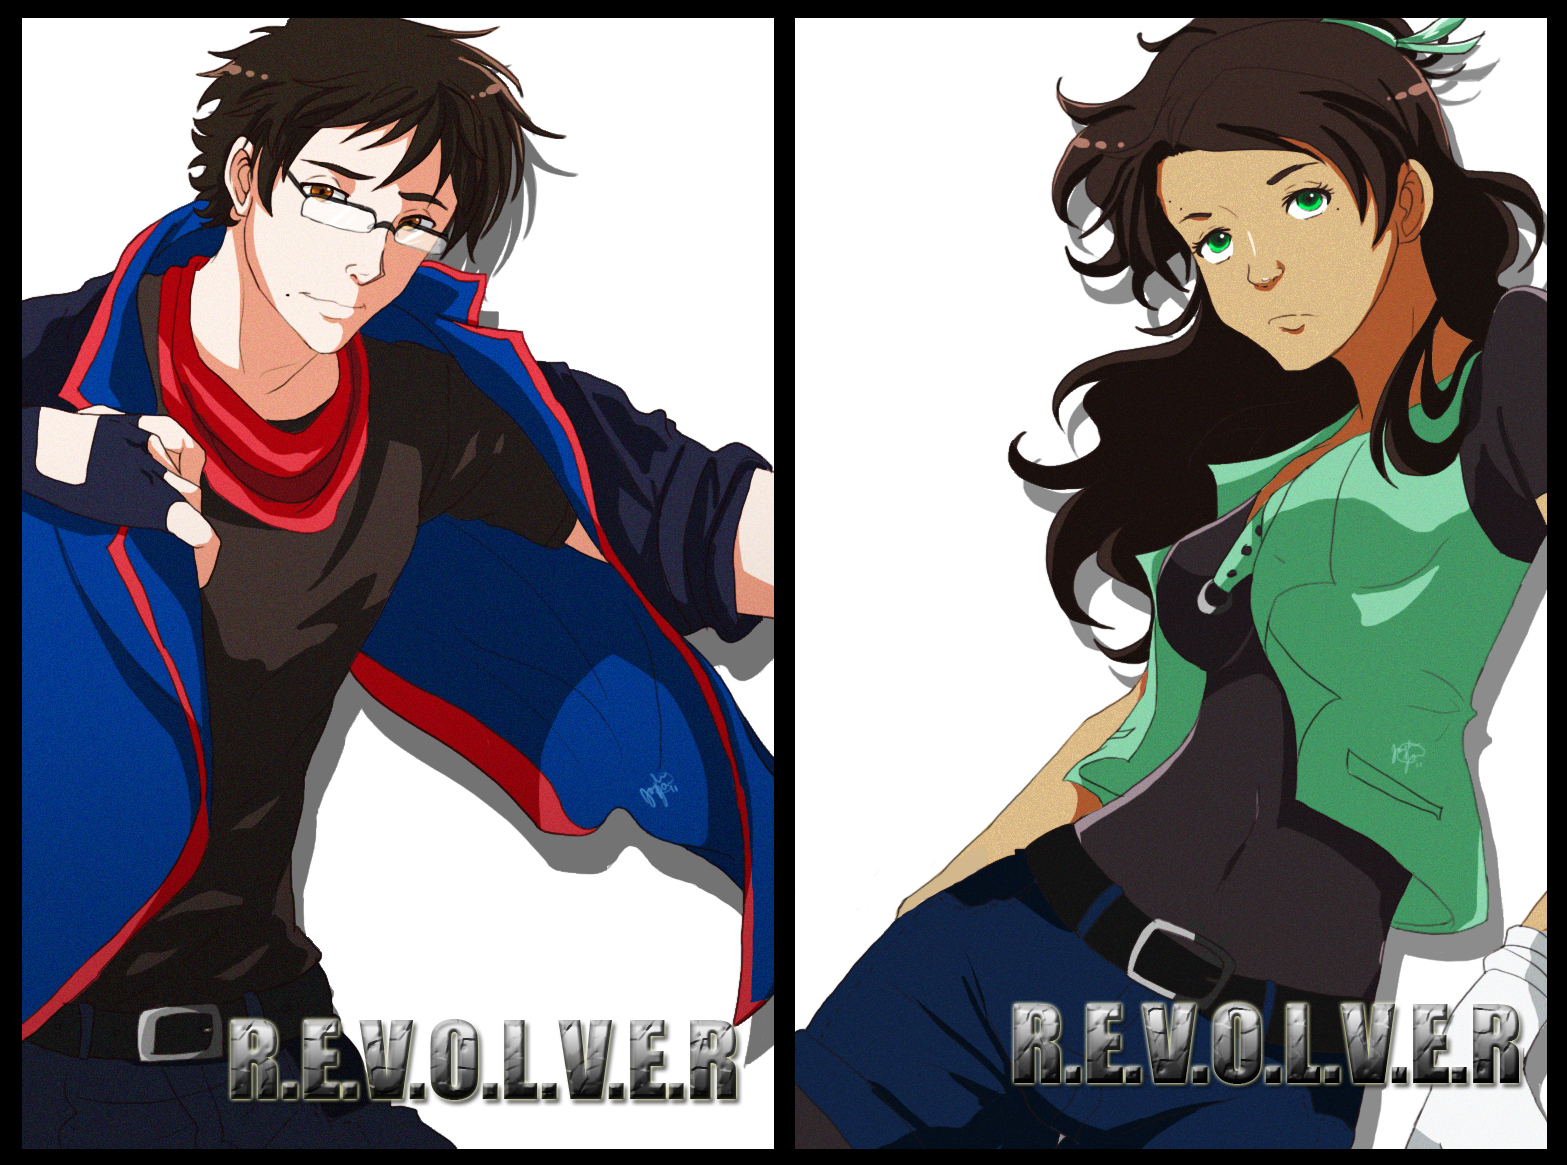 R.E.V.O.L.V.E.R Promo Posters by Chibisima